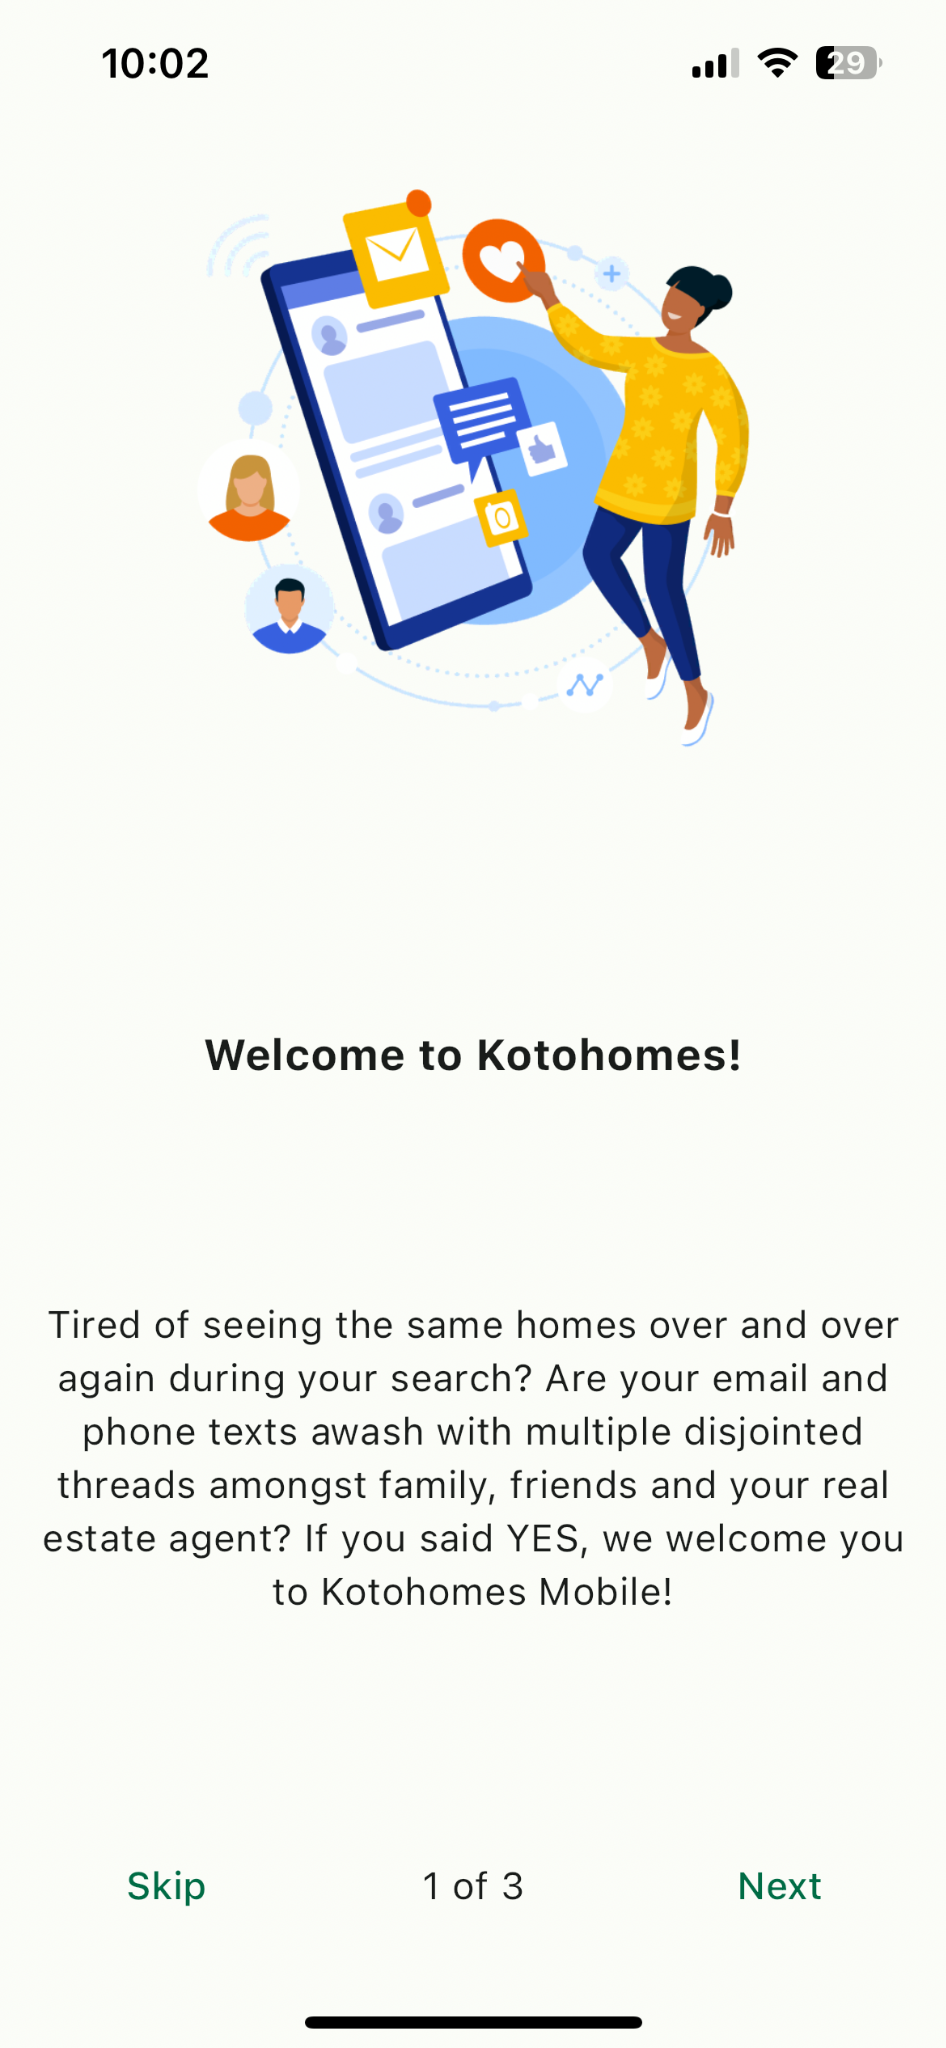 Kotohomes Mobile